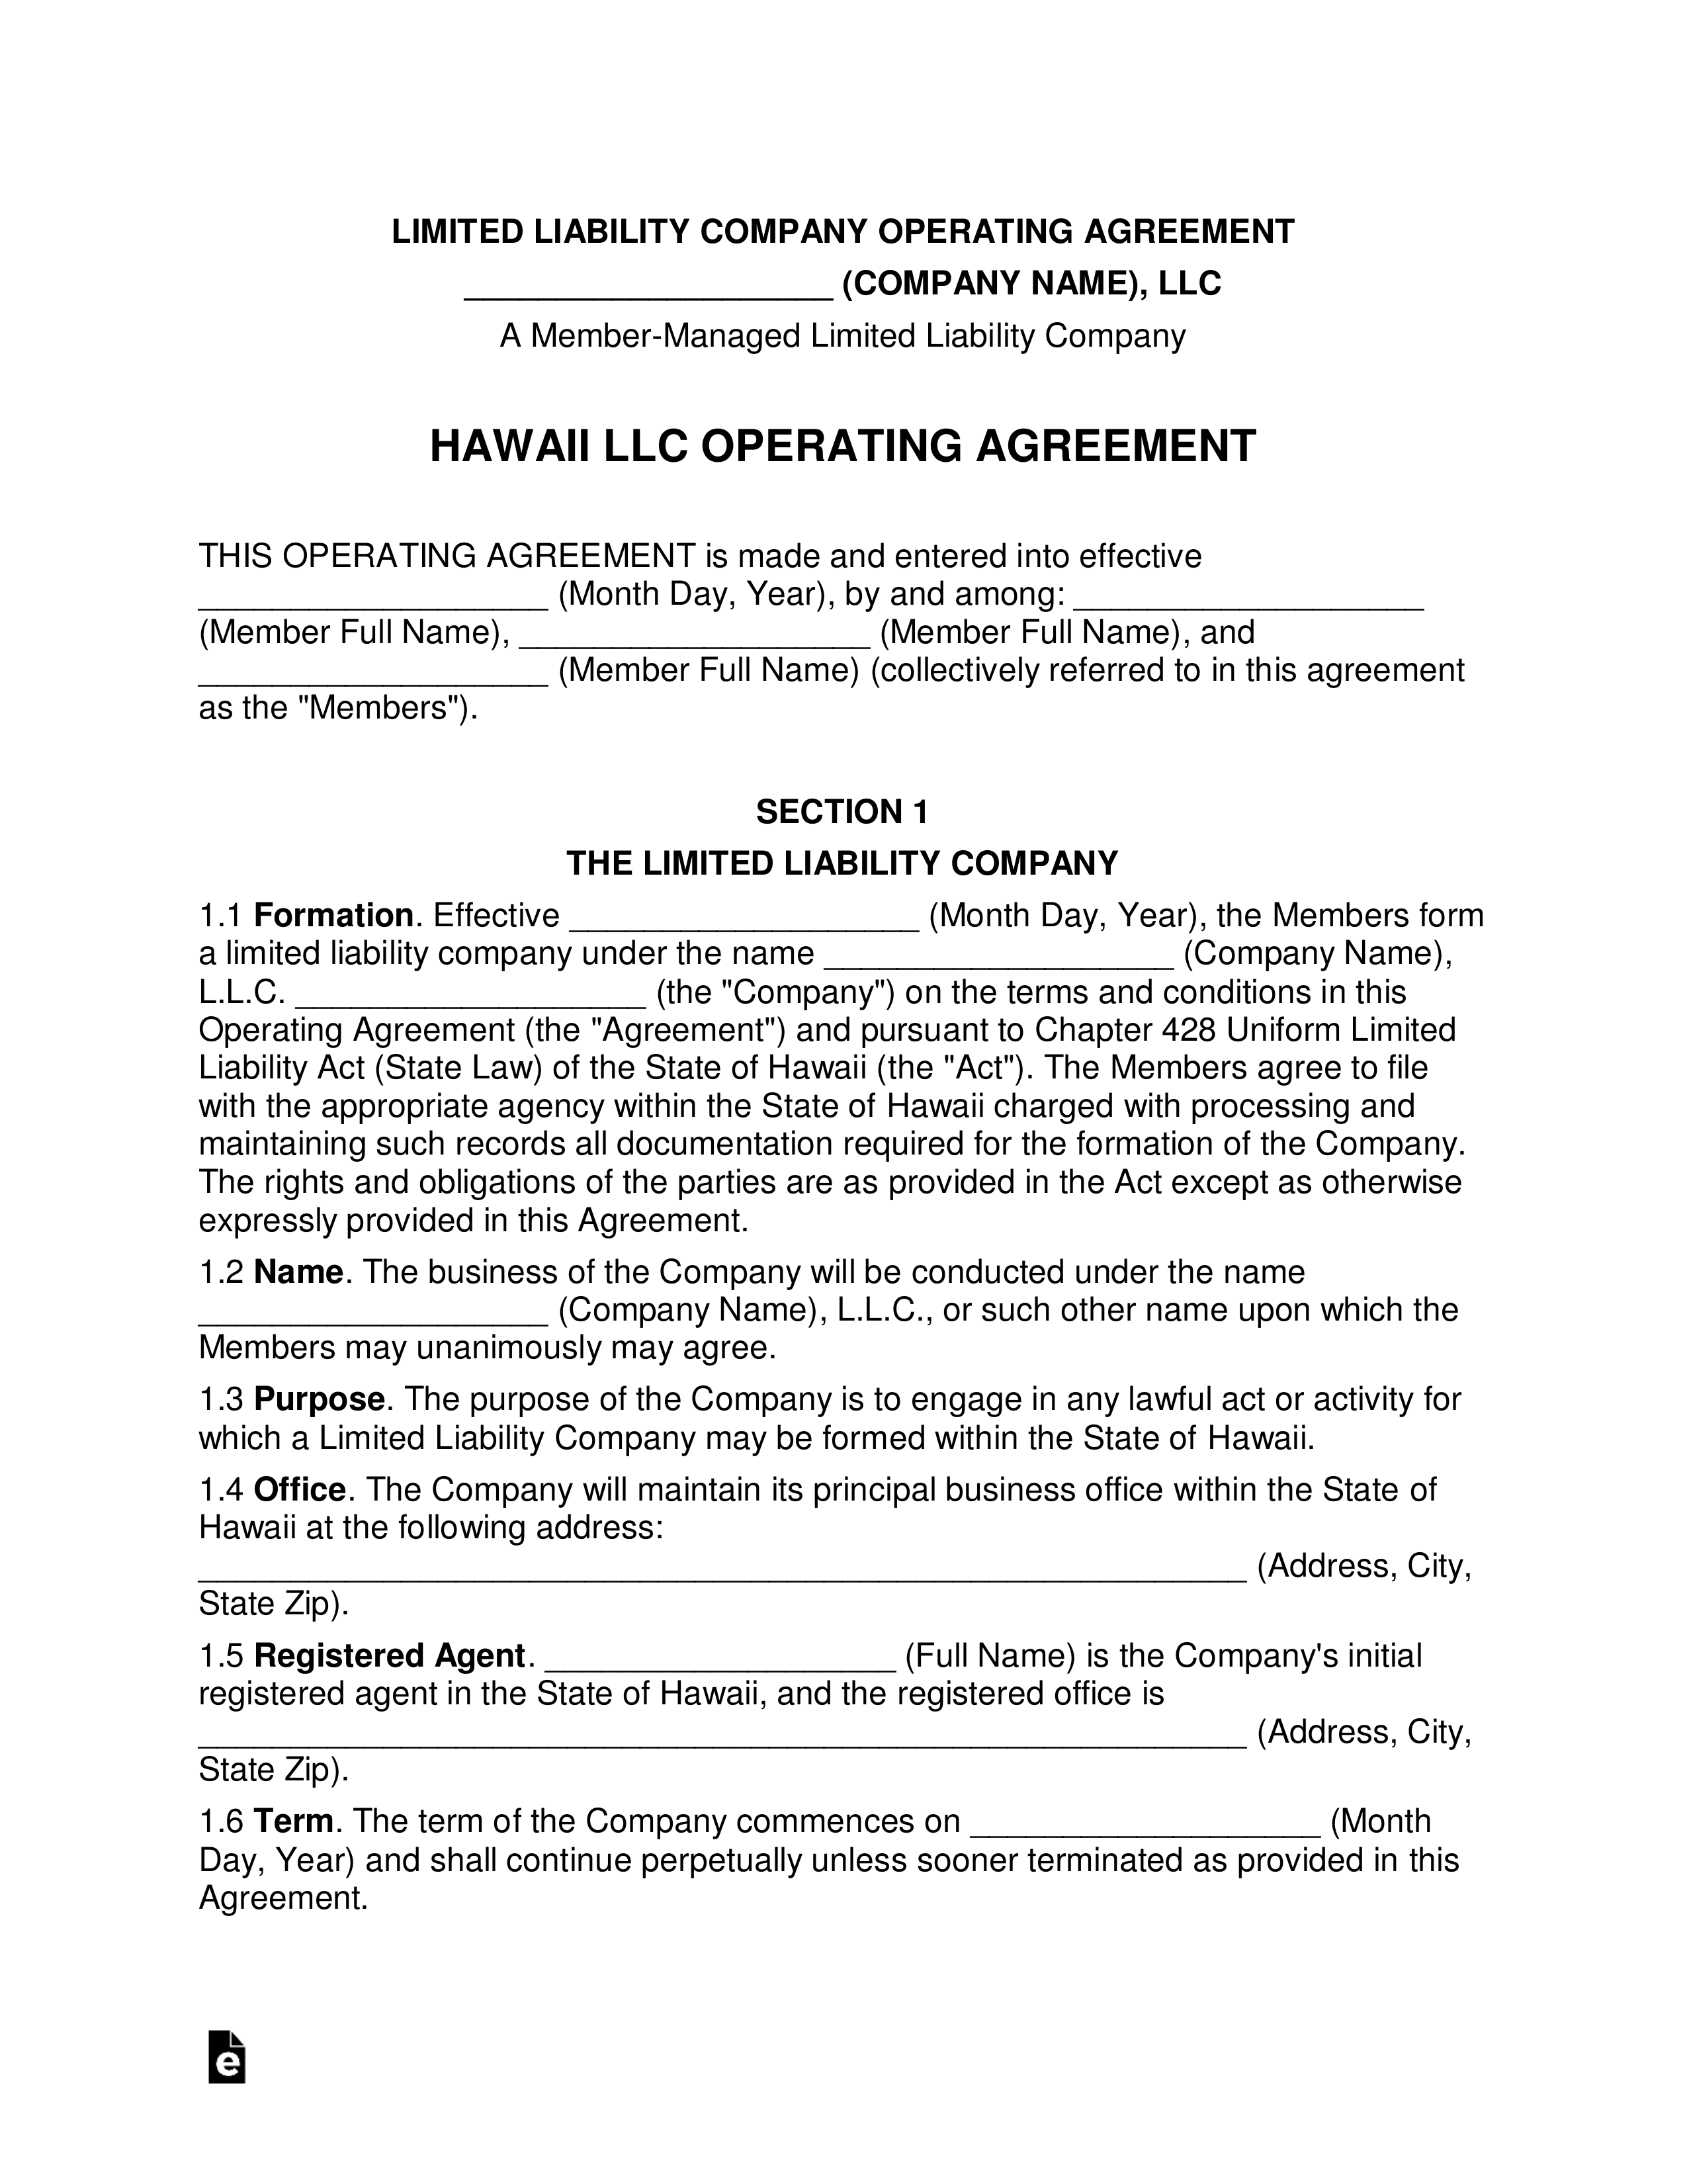 Hawaii Multi-Member LLC Operating Agreement Form